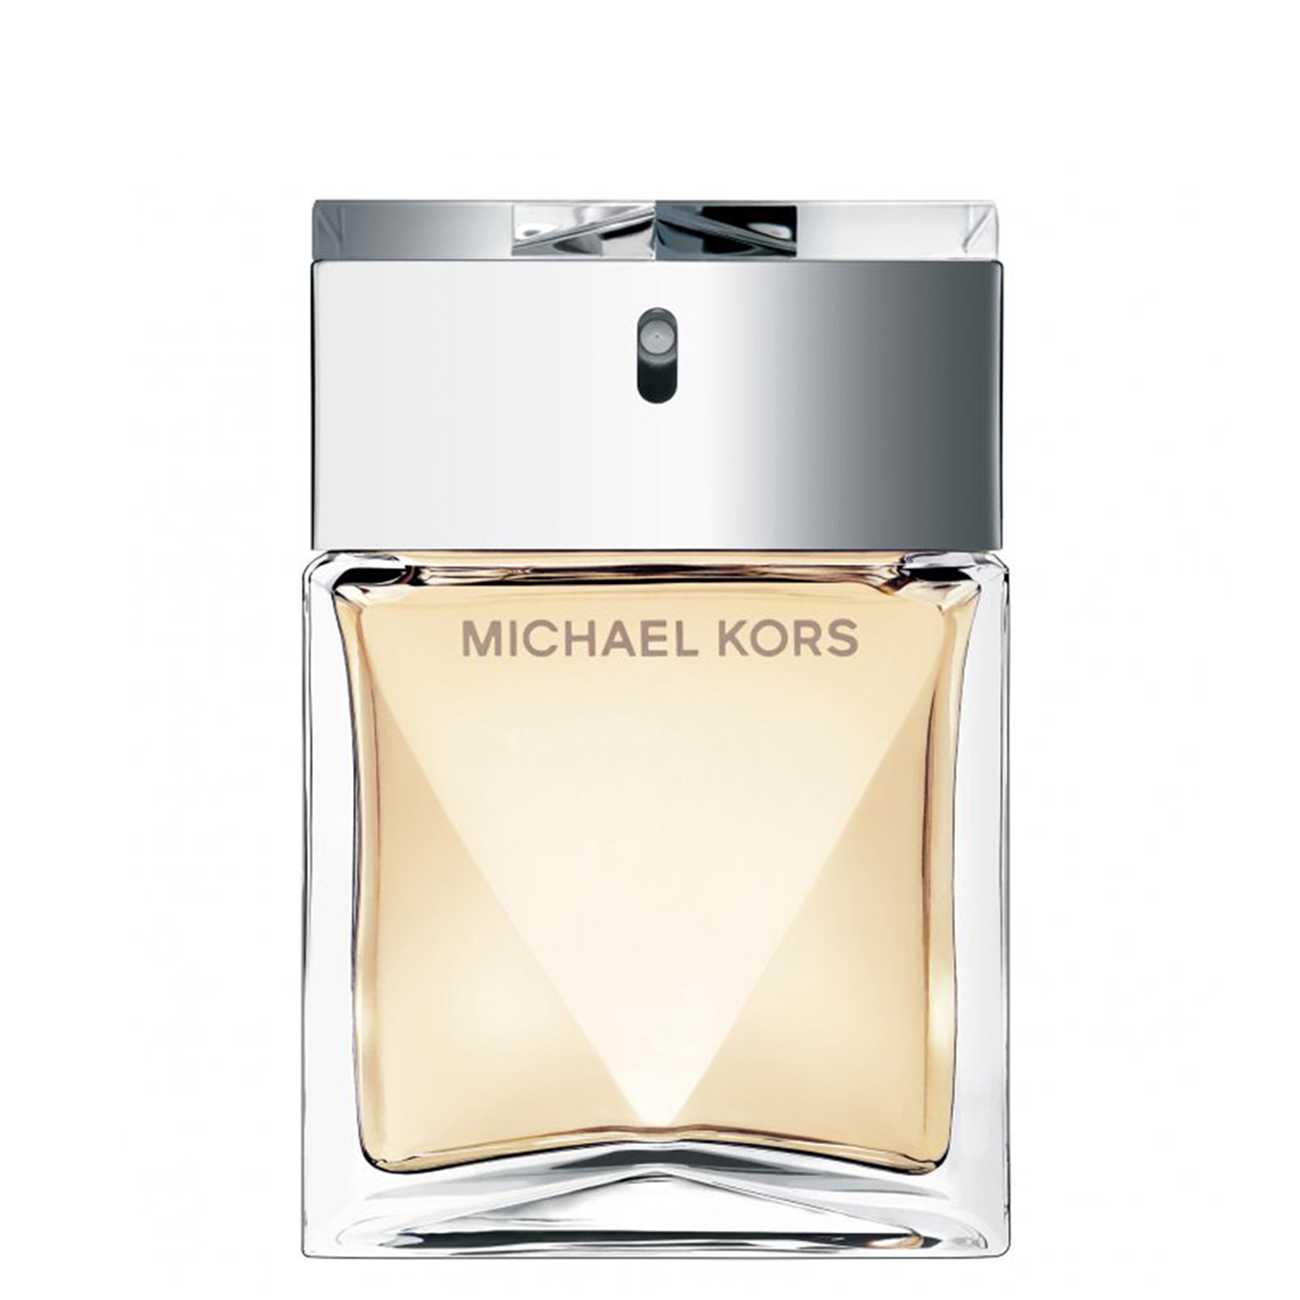 Apa de Parfum Michael Kors WOMAN 100 ML 100ml cu comanda online